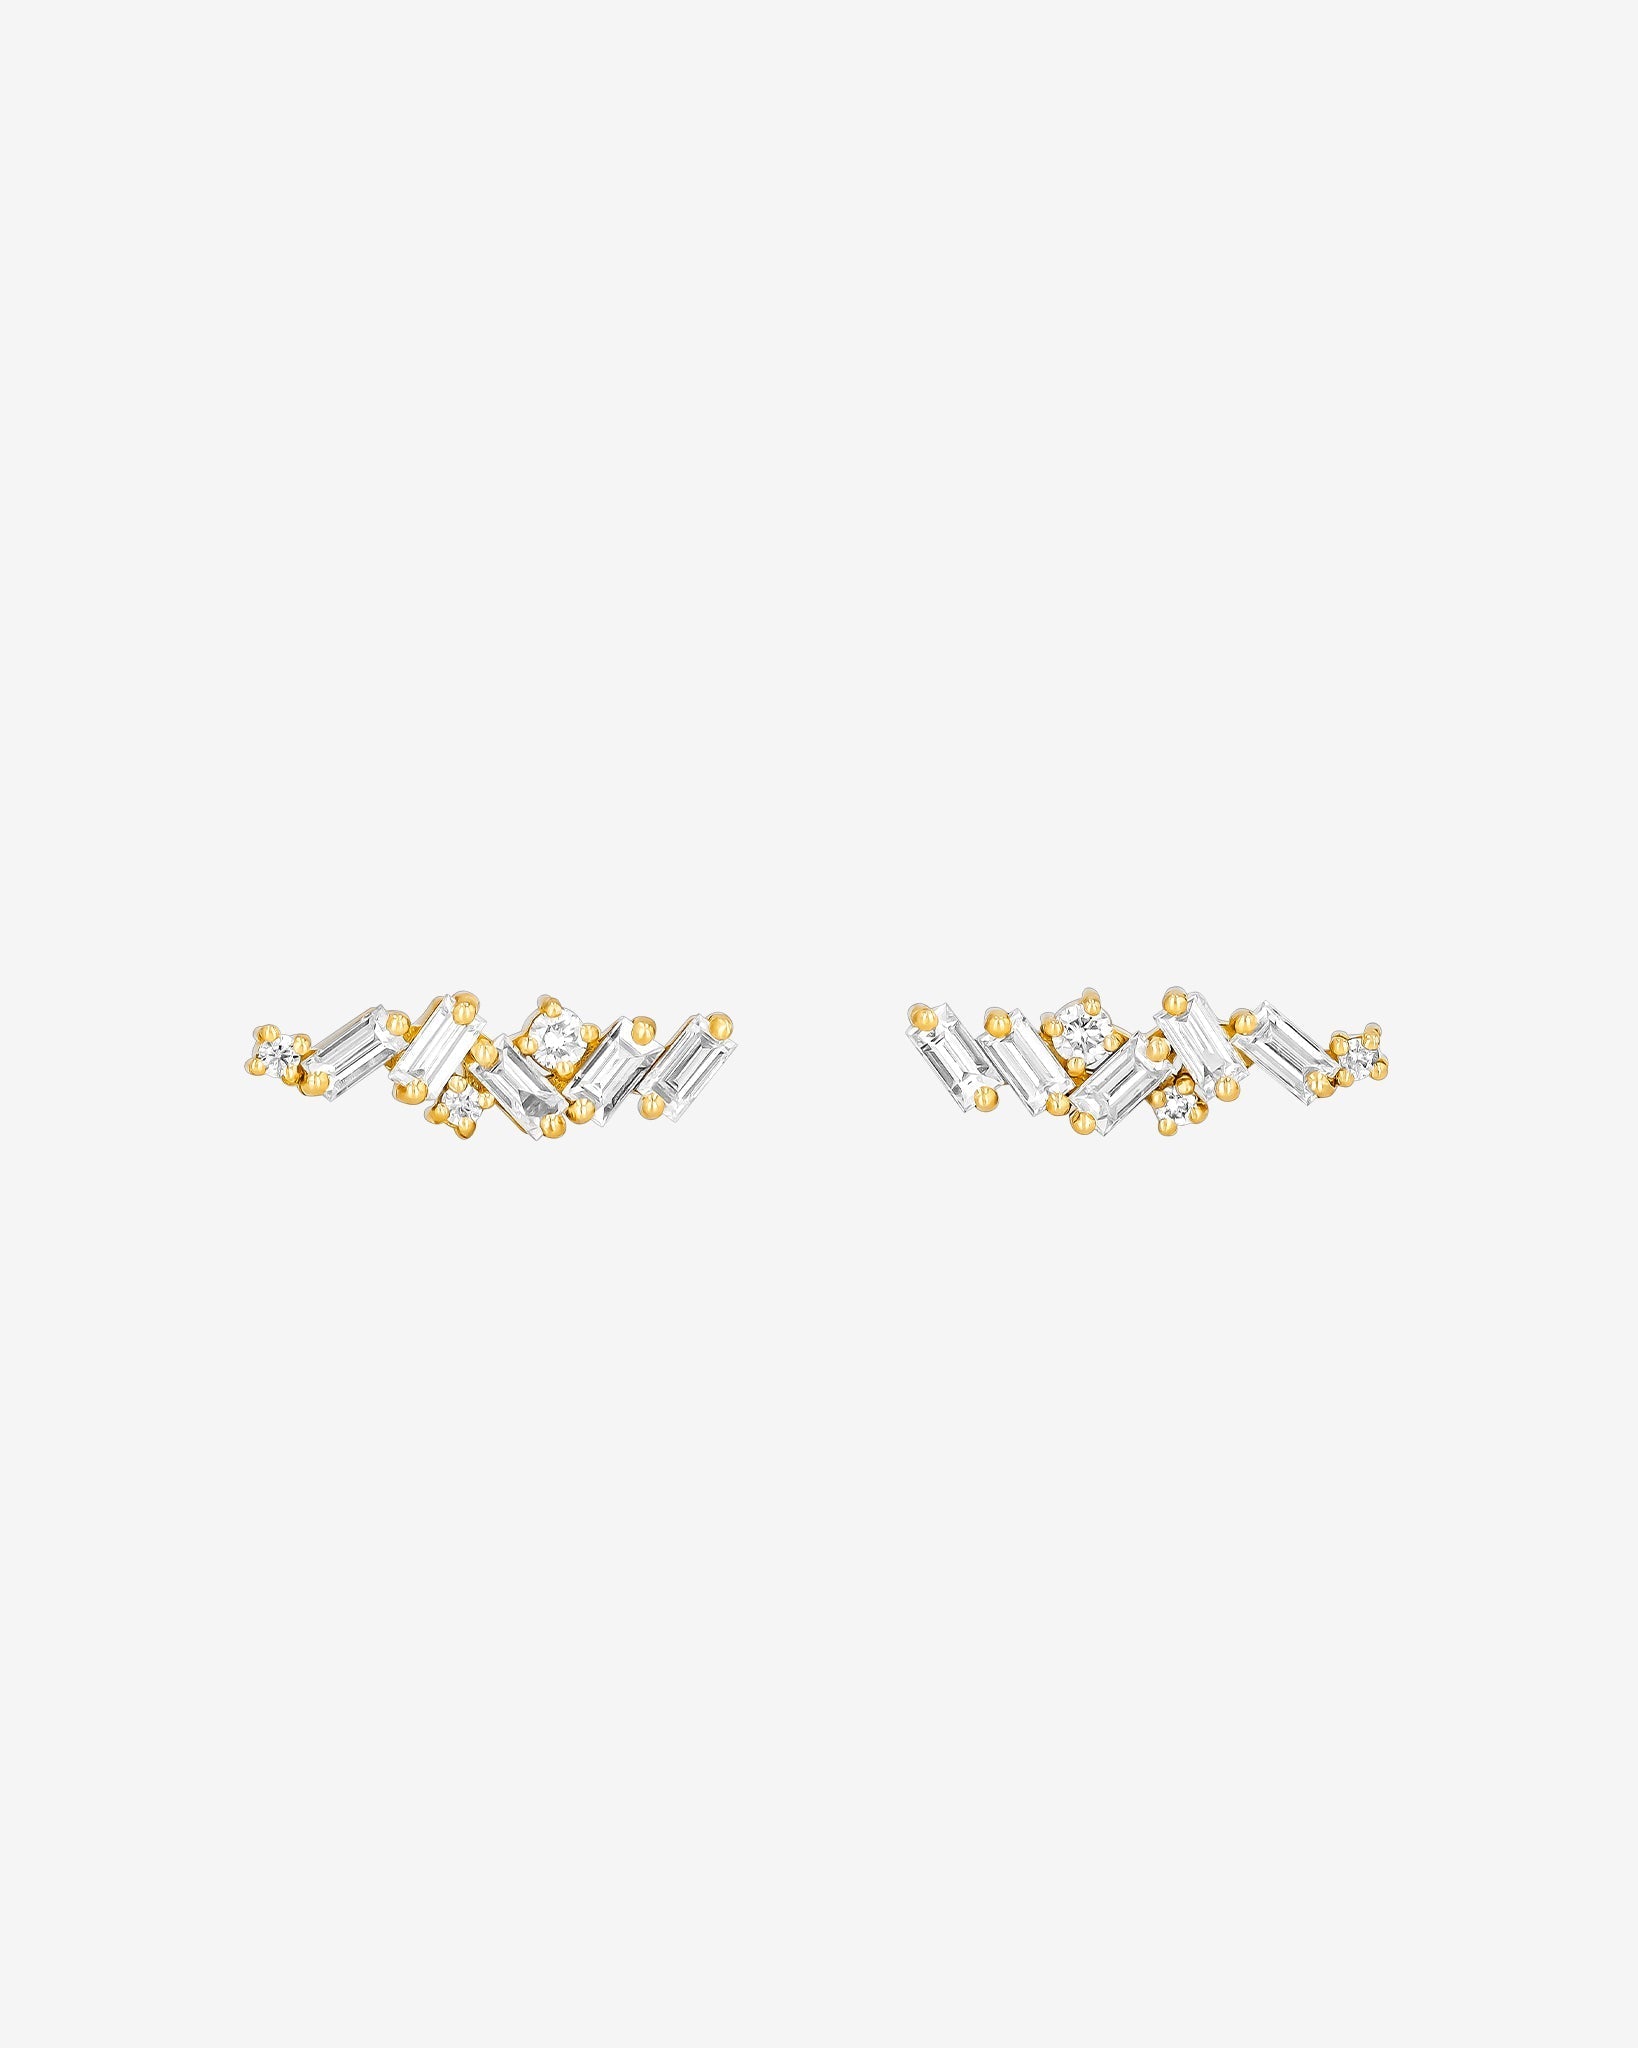 Suzanne Kalan Frenzy Diamond Studs in 18k yellow gold